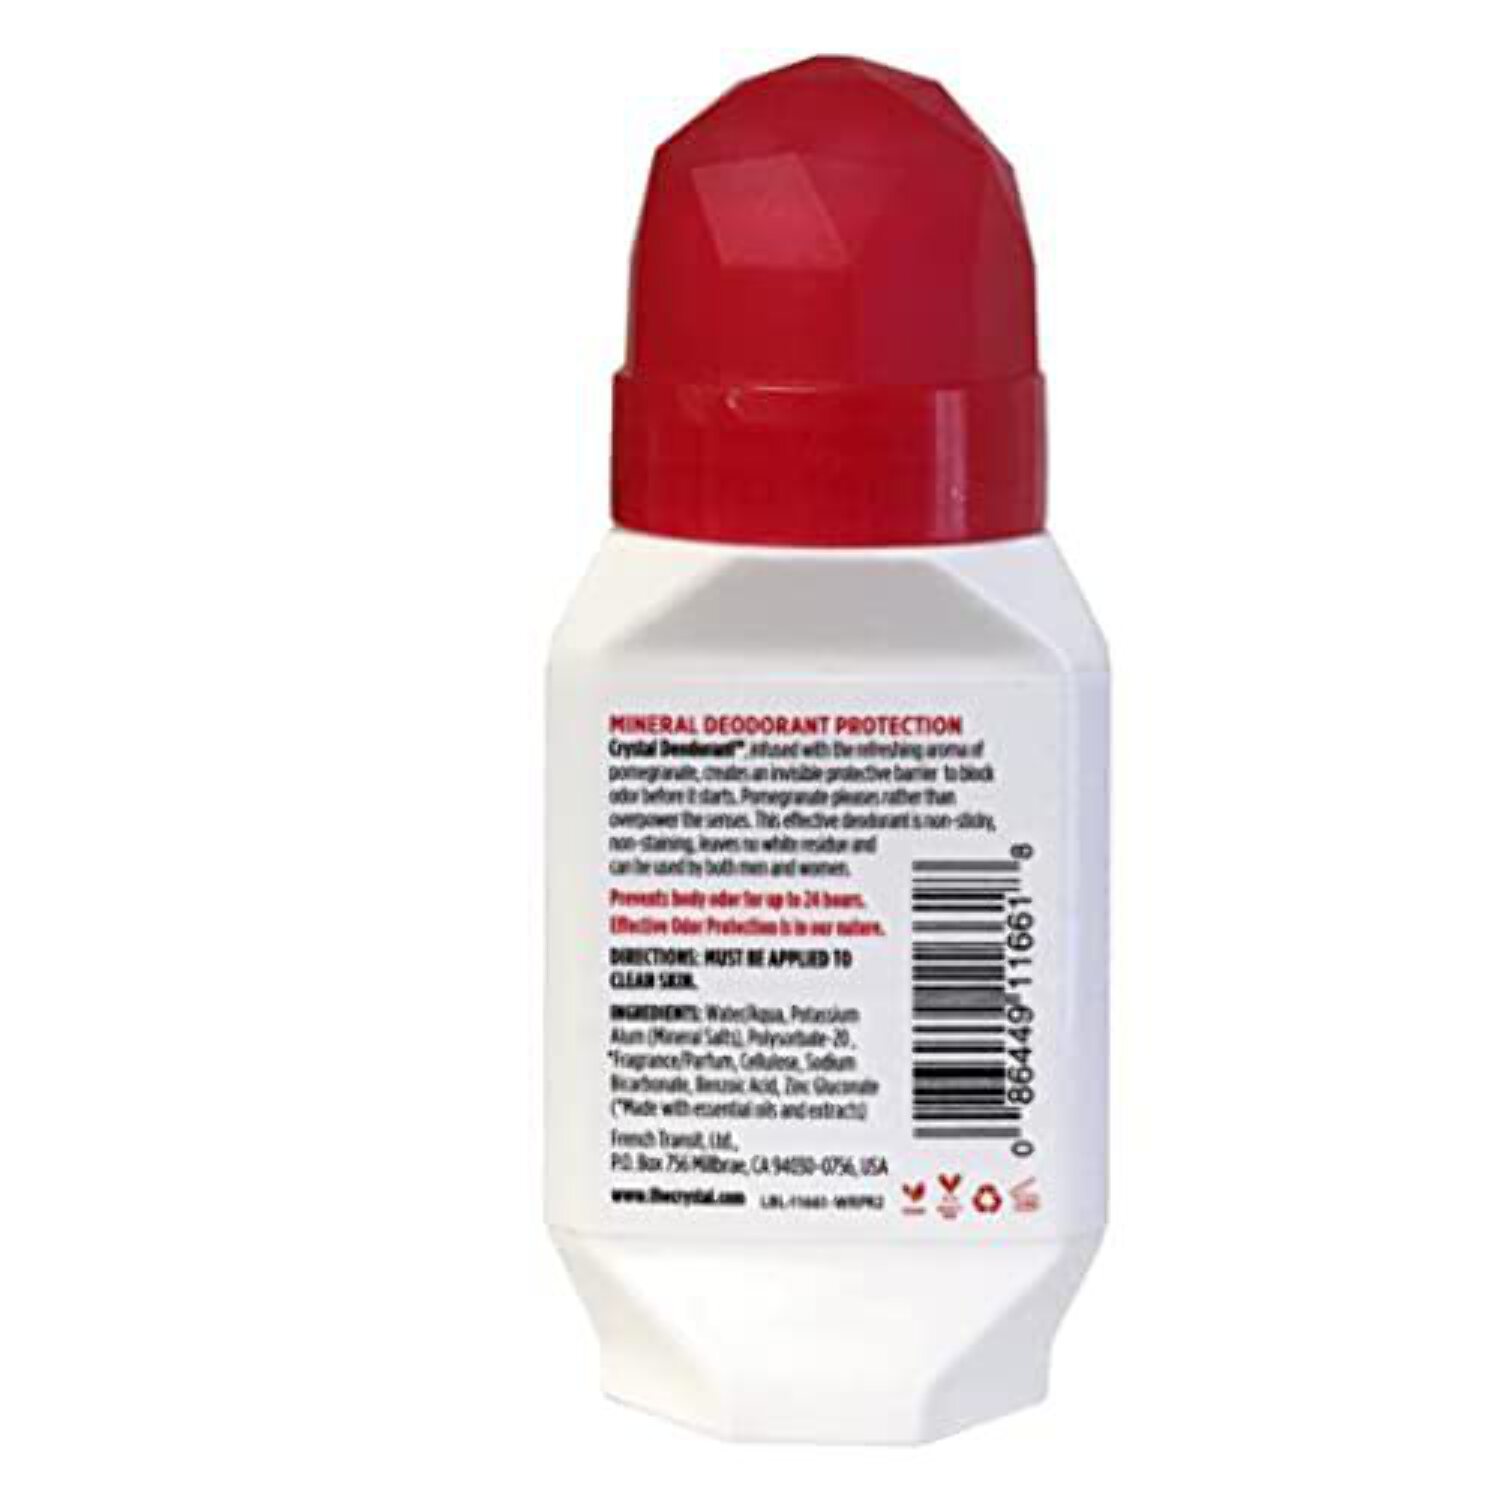 Crystal Mineral Deodorant Roll-On - Pomegranate 2.25 fl oz Liquid - image 9 of 9